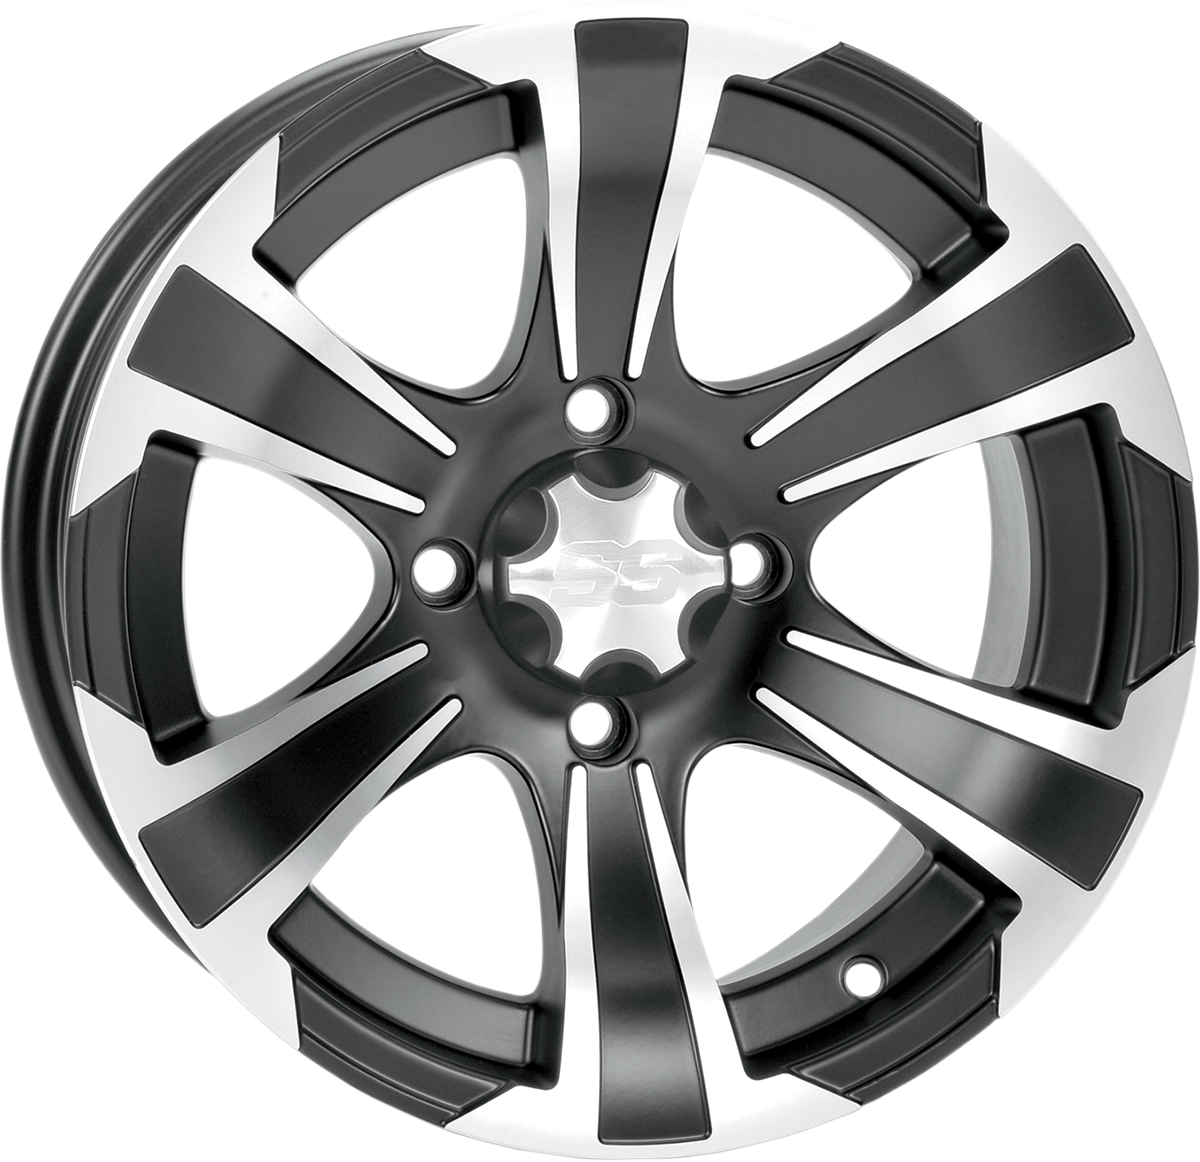 ITP SS312 Alloy Wheel - Rear - Black Machined - 14x8 - 4/110 - 3+5 1428446536B